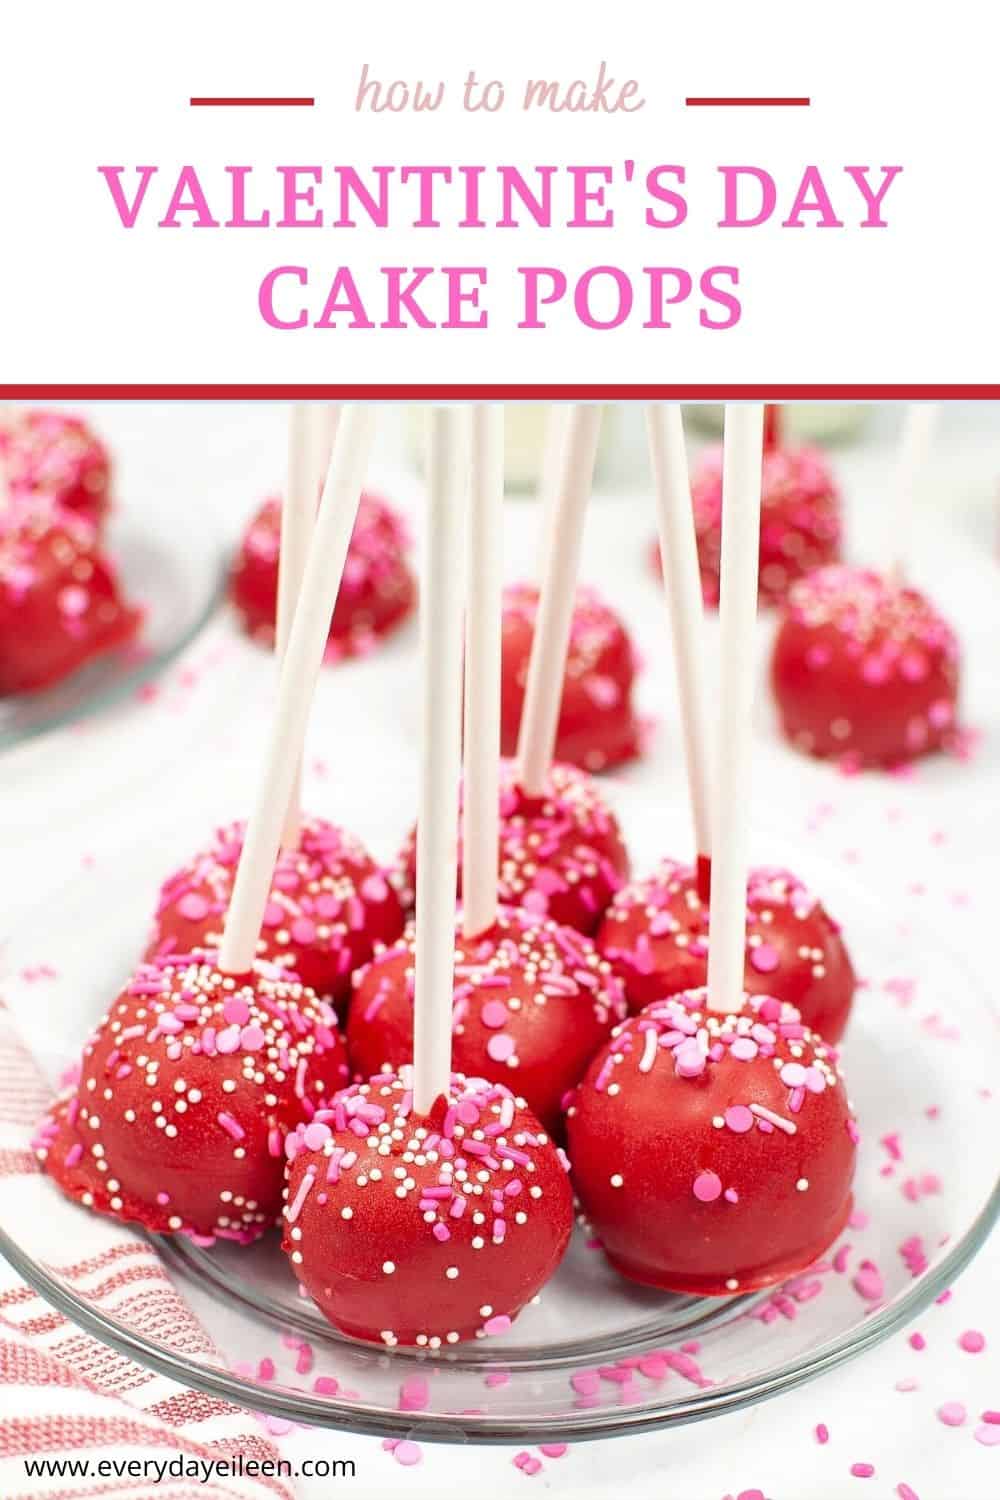 How to Make Cake Pops | Easy Homemade Cake Pop Recipe - YouTube